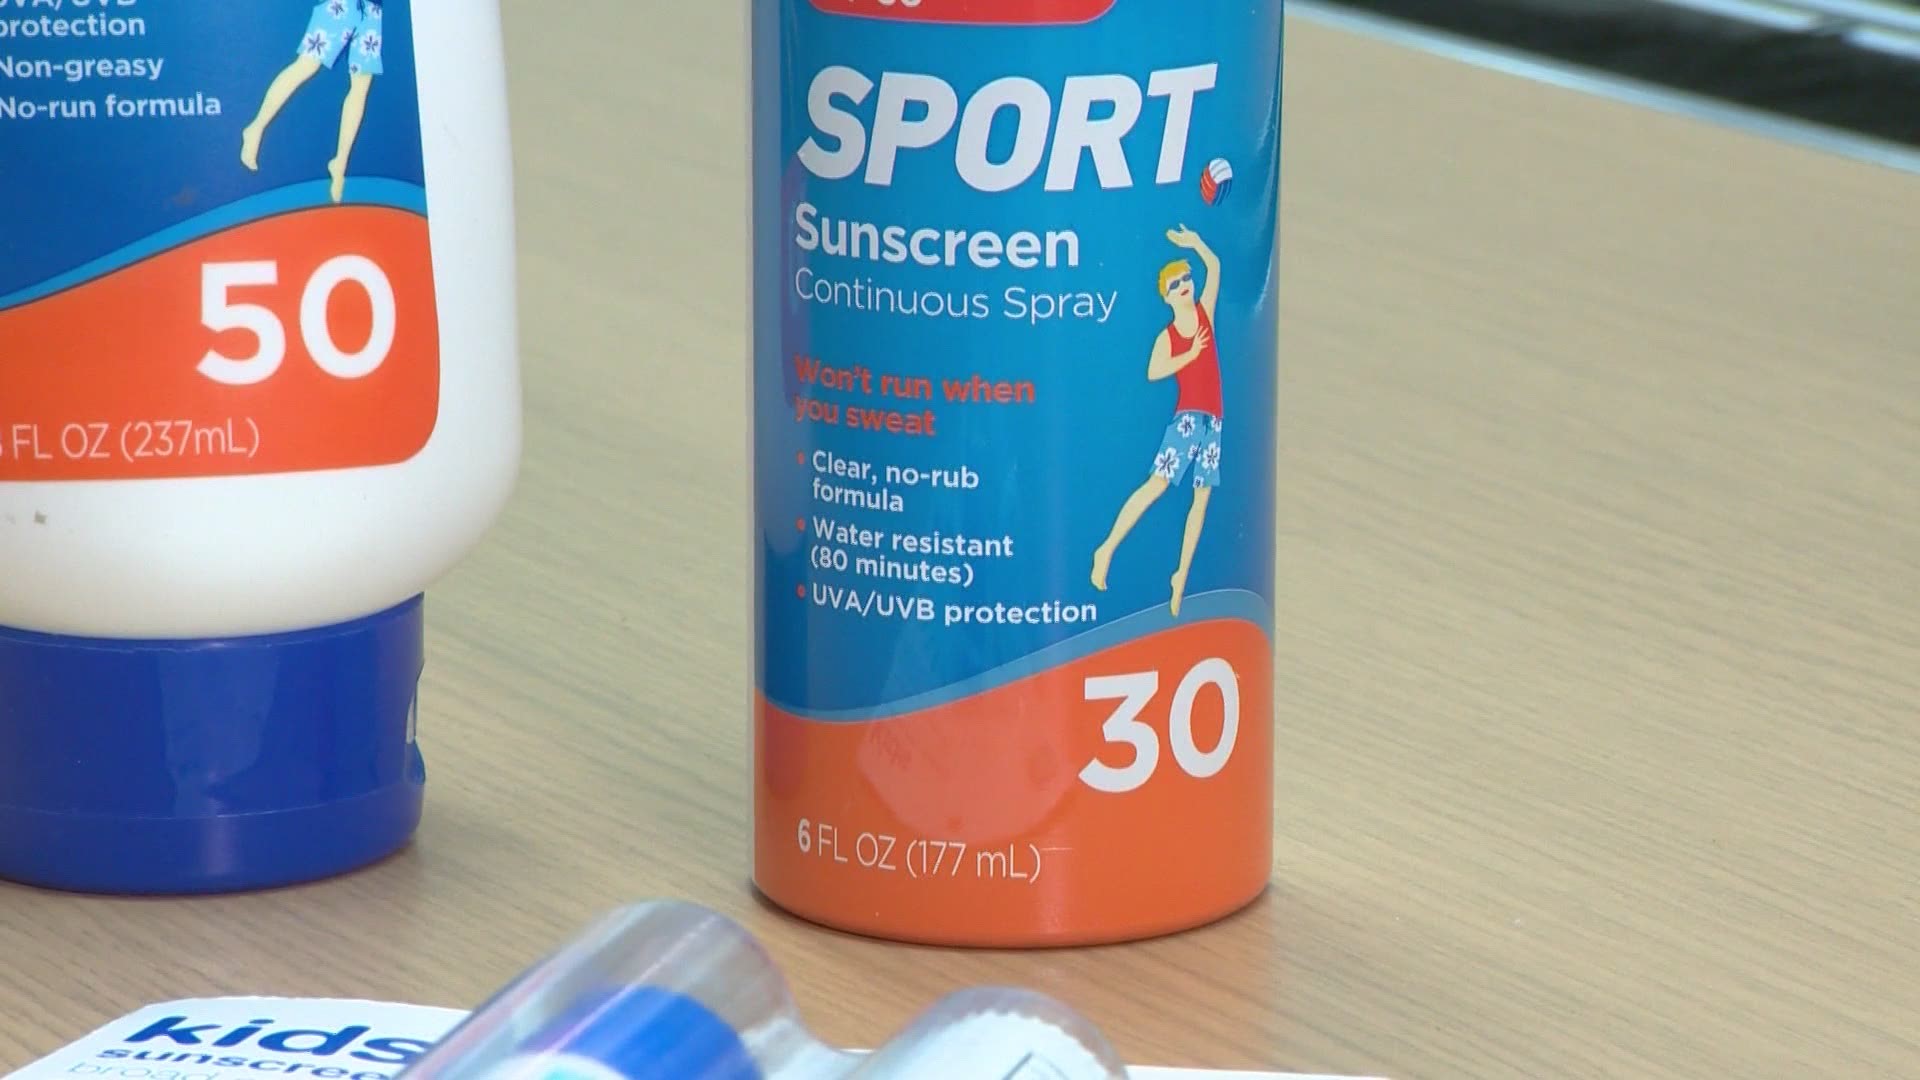 Dr. Mamina Turegano explains the importance of sunscreen